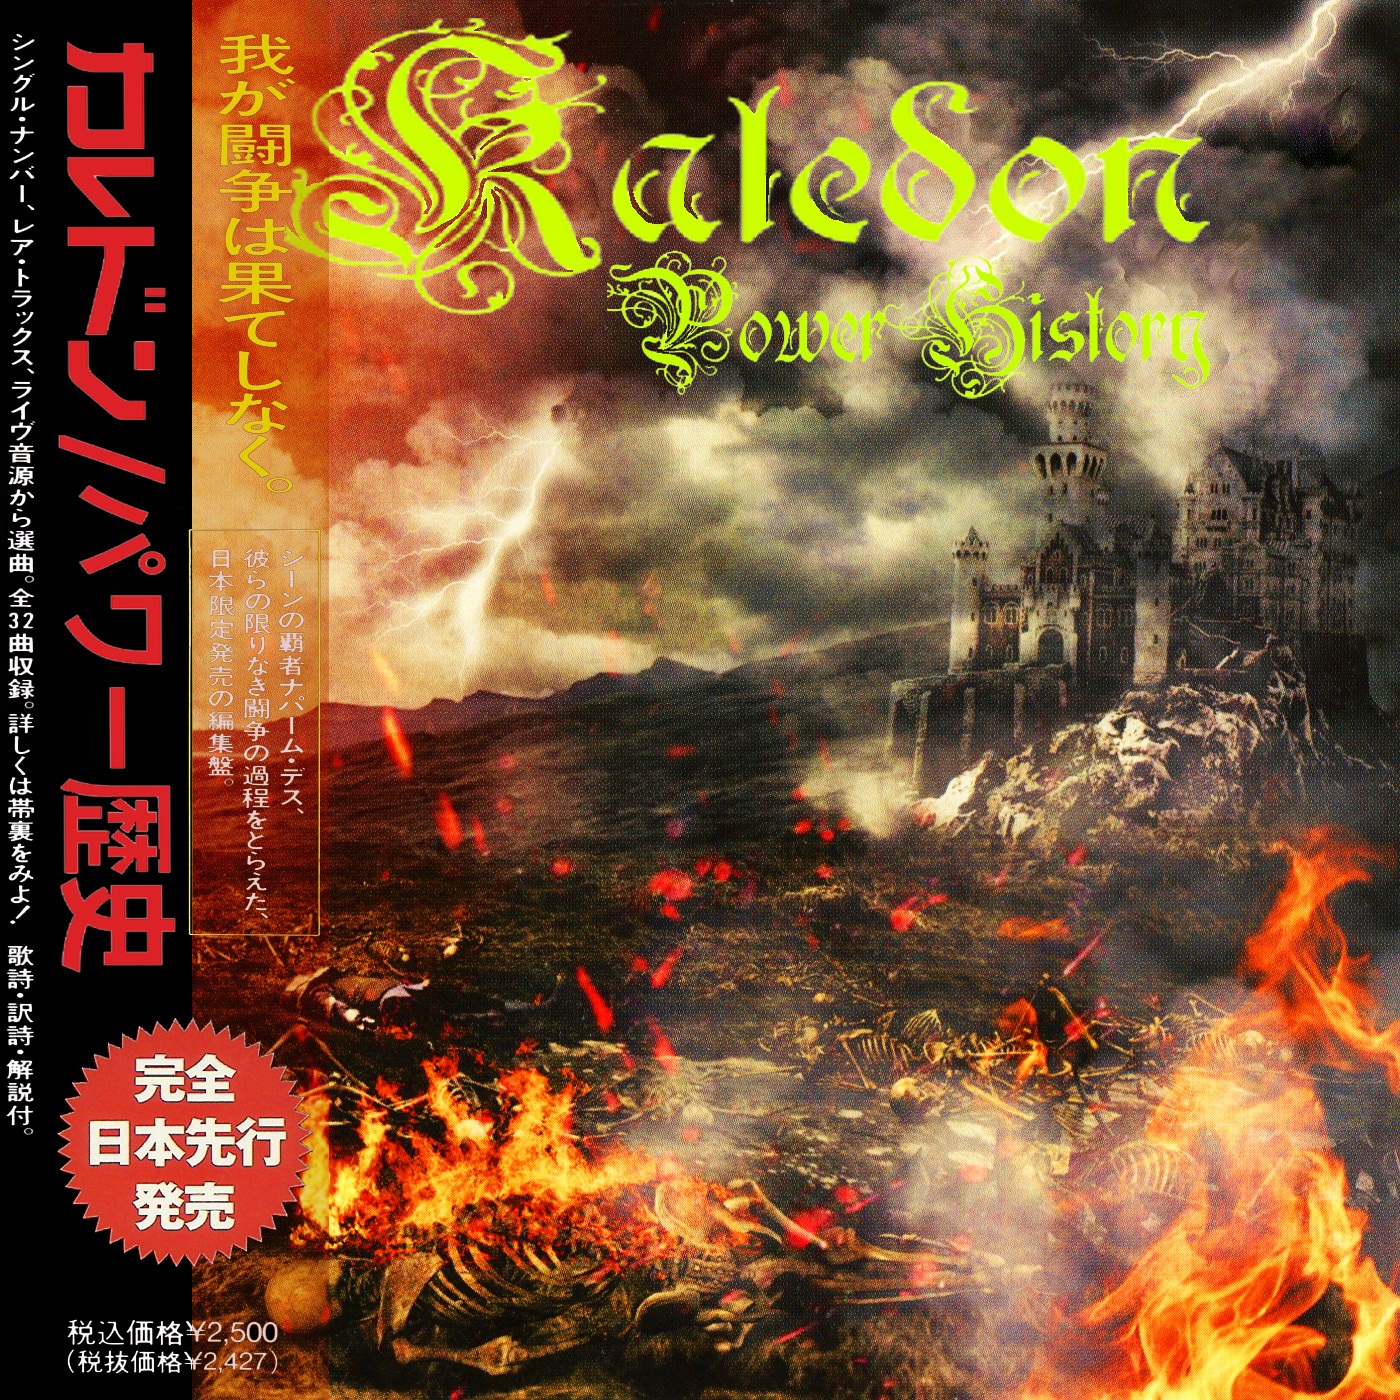 Kaledon. Rob Rock Rage of Creation. 2010 - Holy Rage (Holy Rage). Power of History.